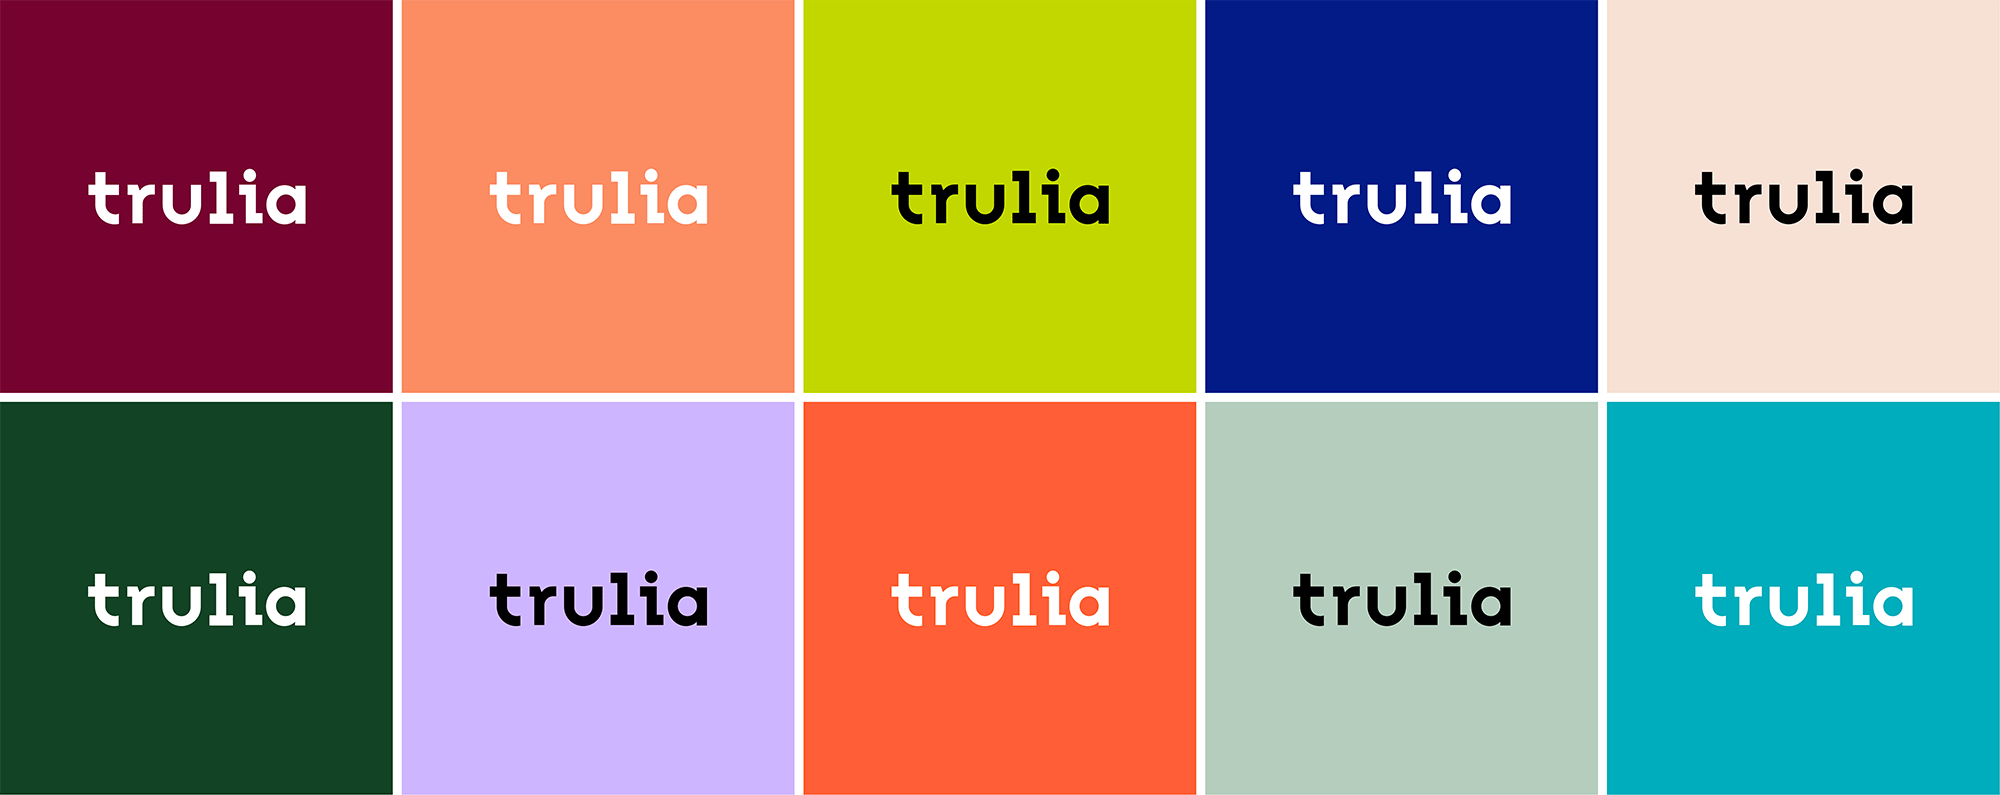 New Logo and Identity for Trulia by Design Studio